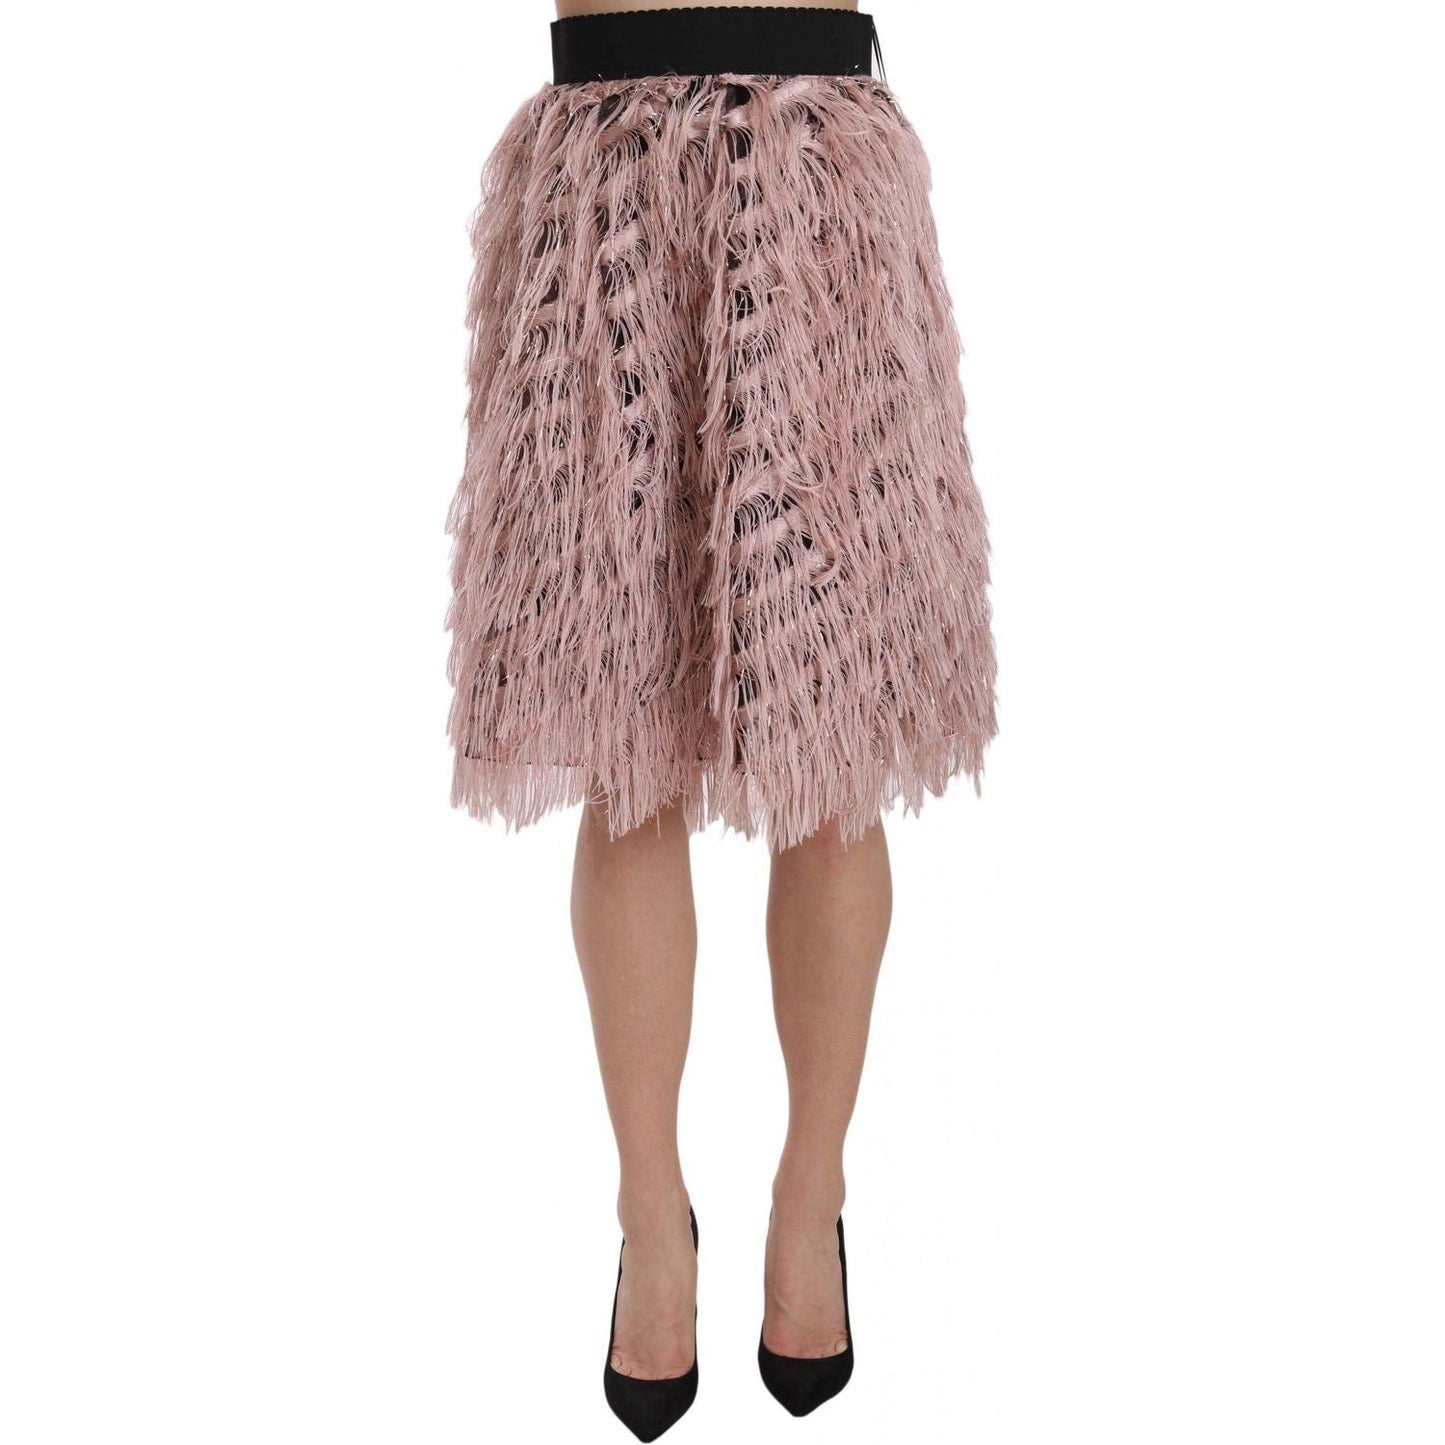 Dolce & Gabbana Wide Elastic Waist High Fashion Skirt pink-gold-fringe-metallic-pencil-a-line-skirt 657889-pink-gold-fringe-metallic-pencil-a-line-skirt.jpg